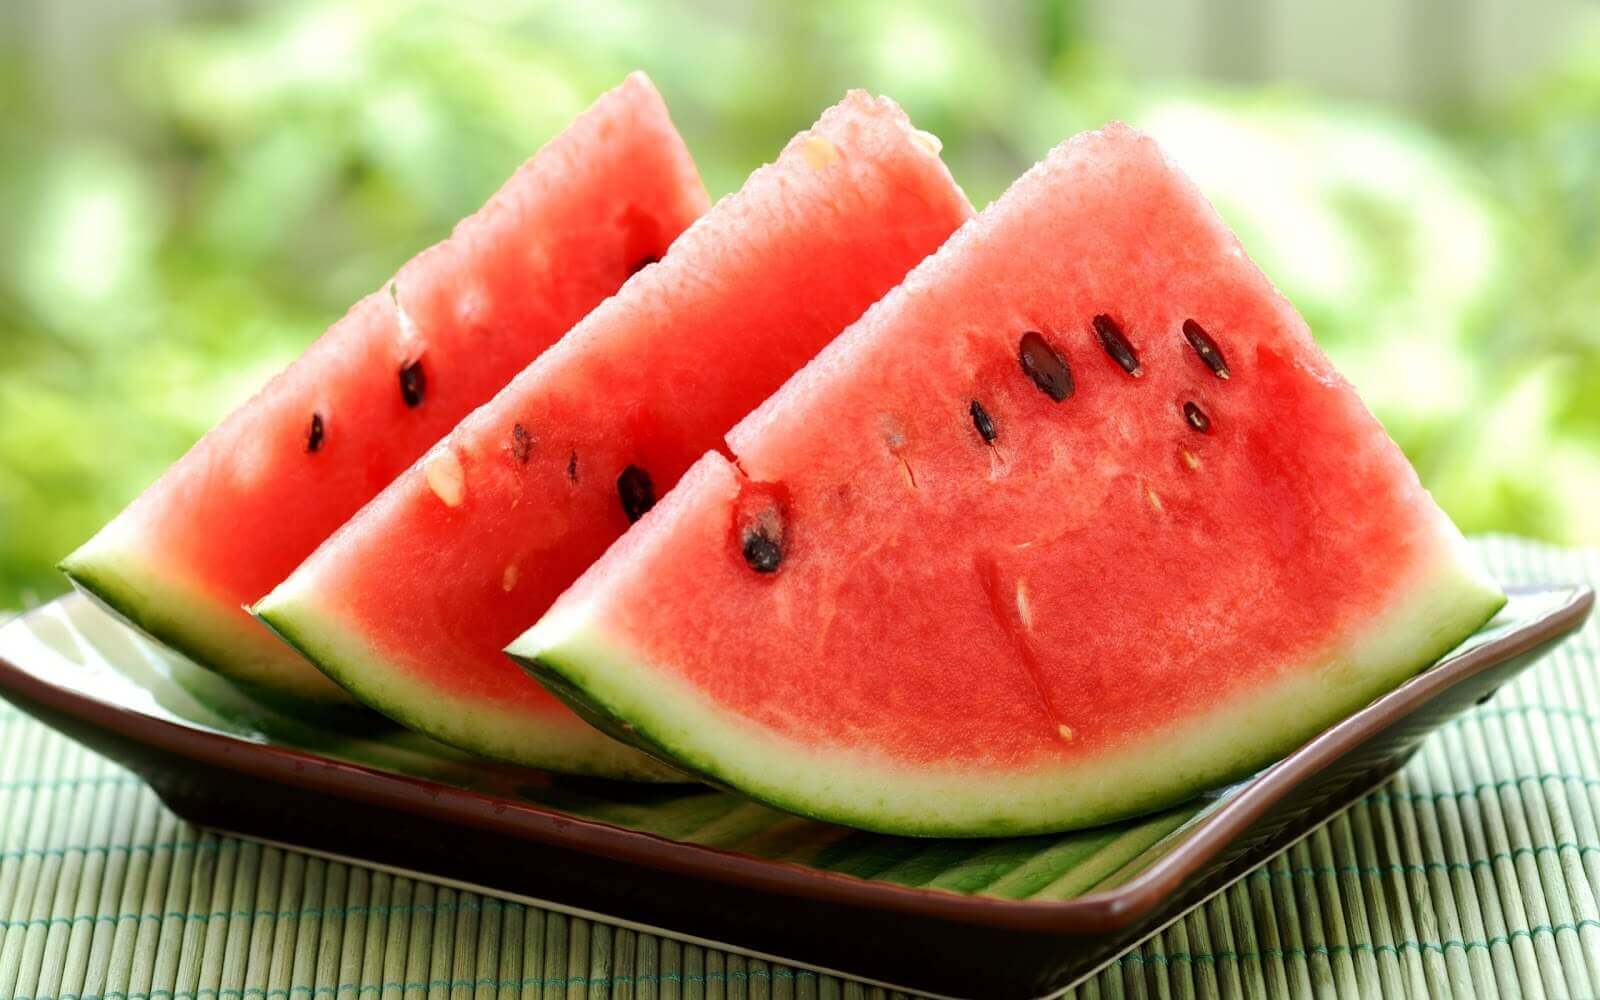 Watermelon slices.